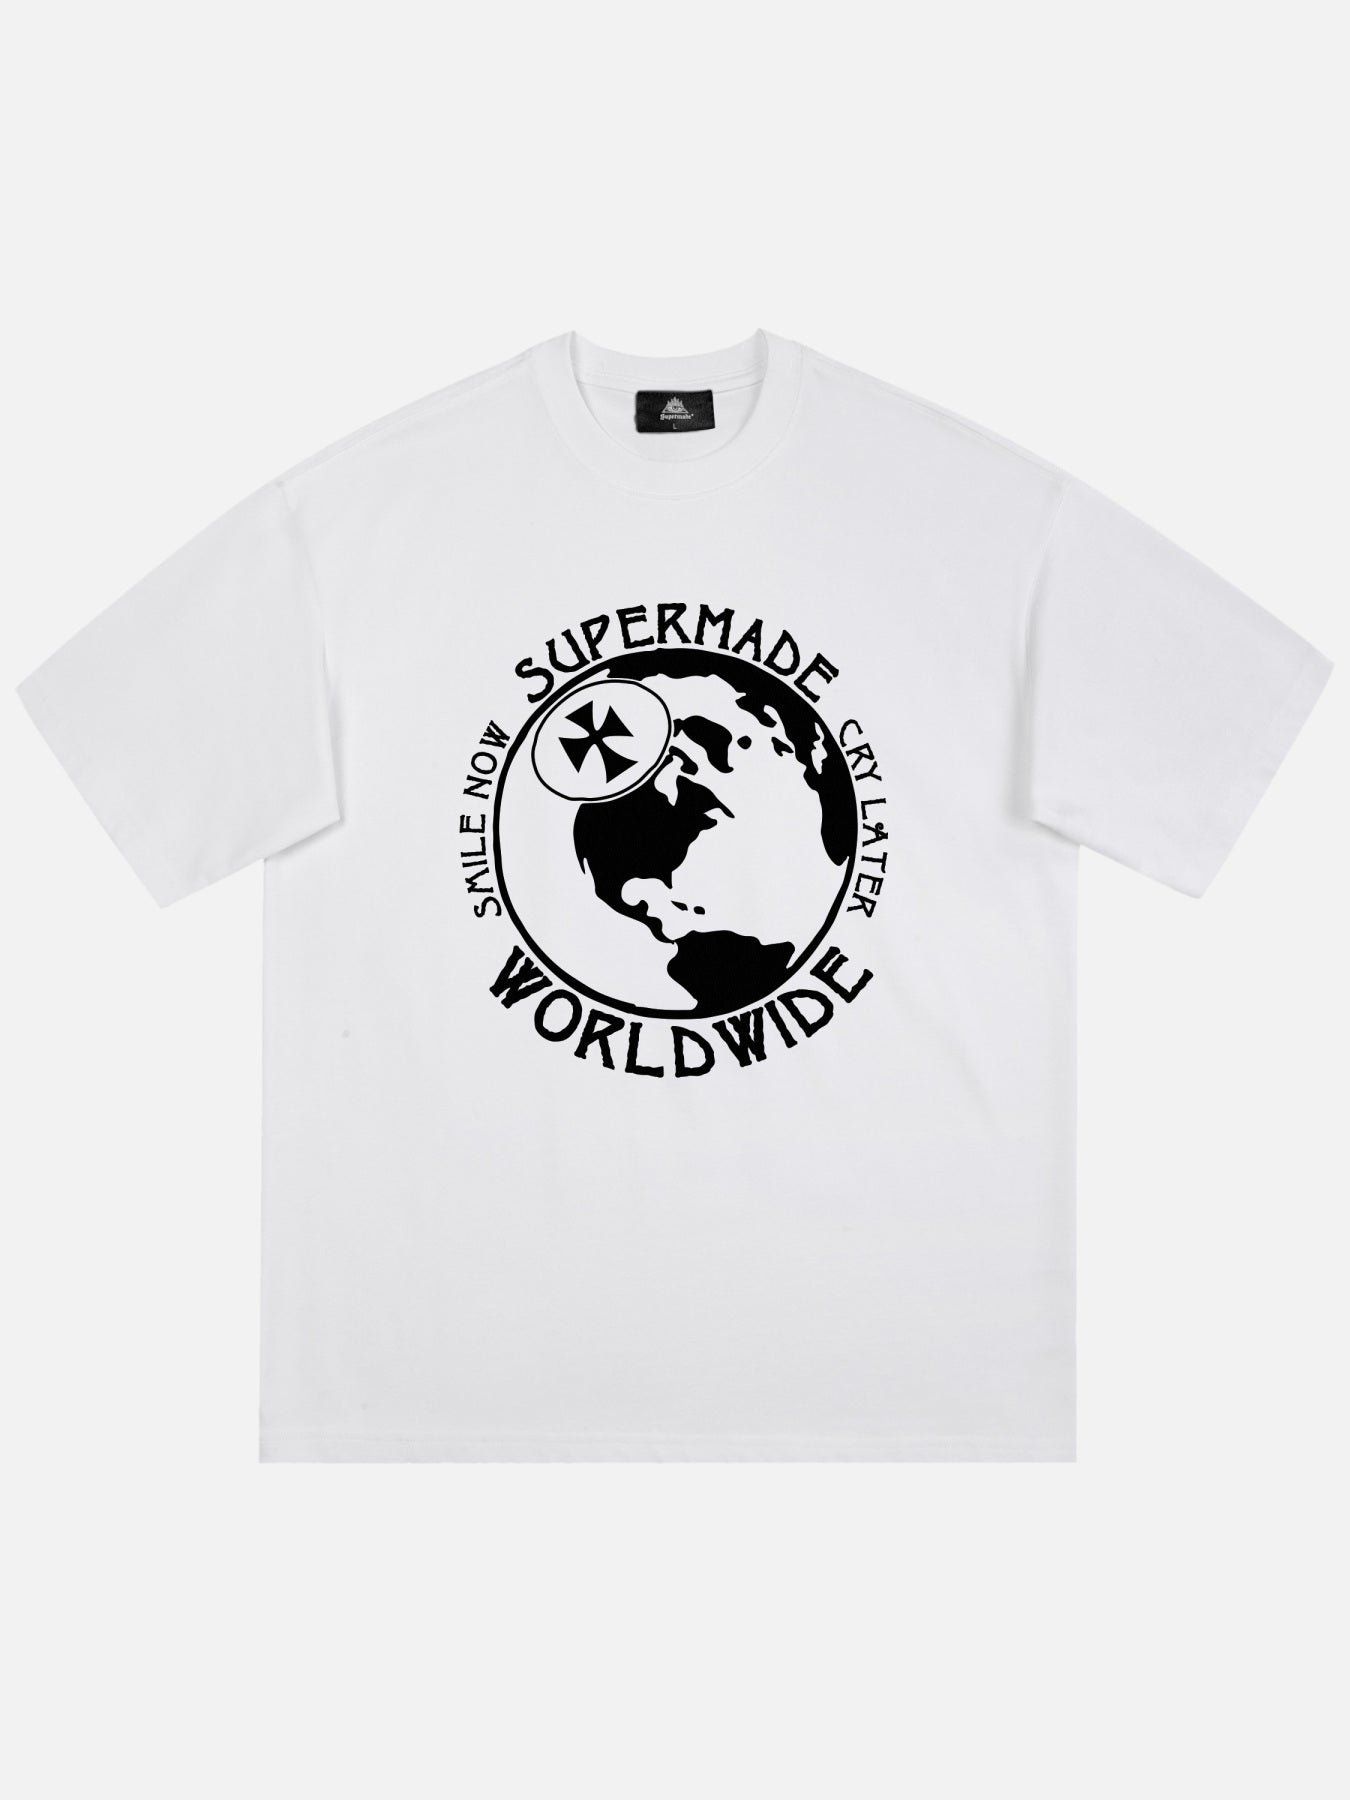 Thesupermade Globe Print T-shirt